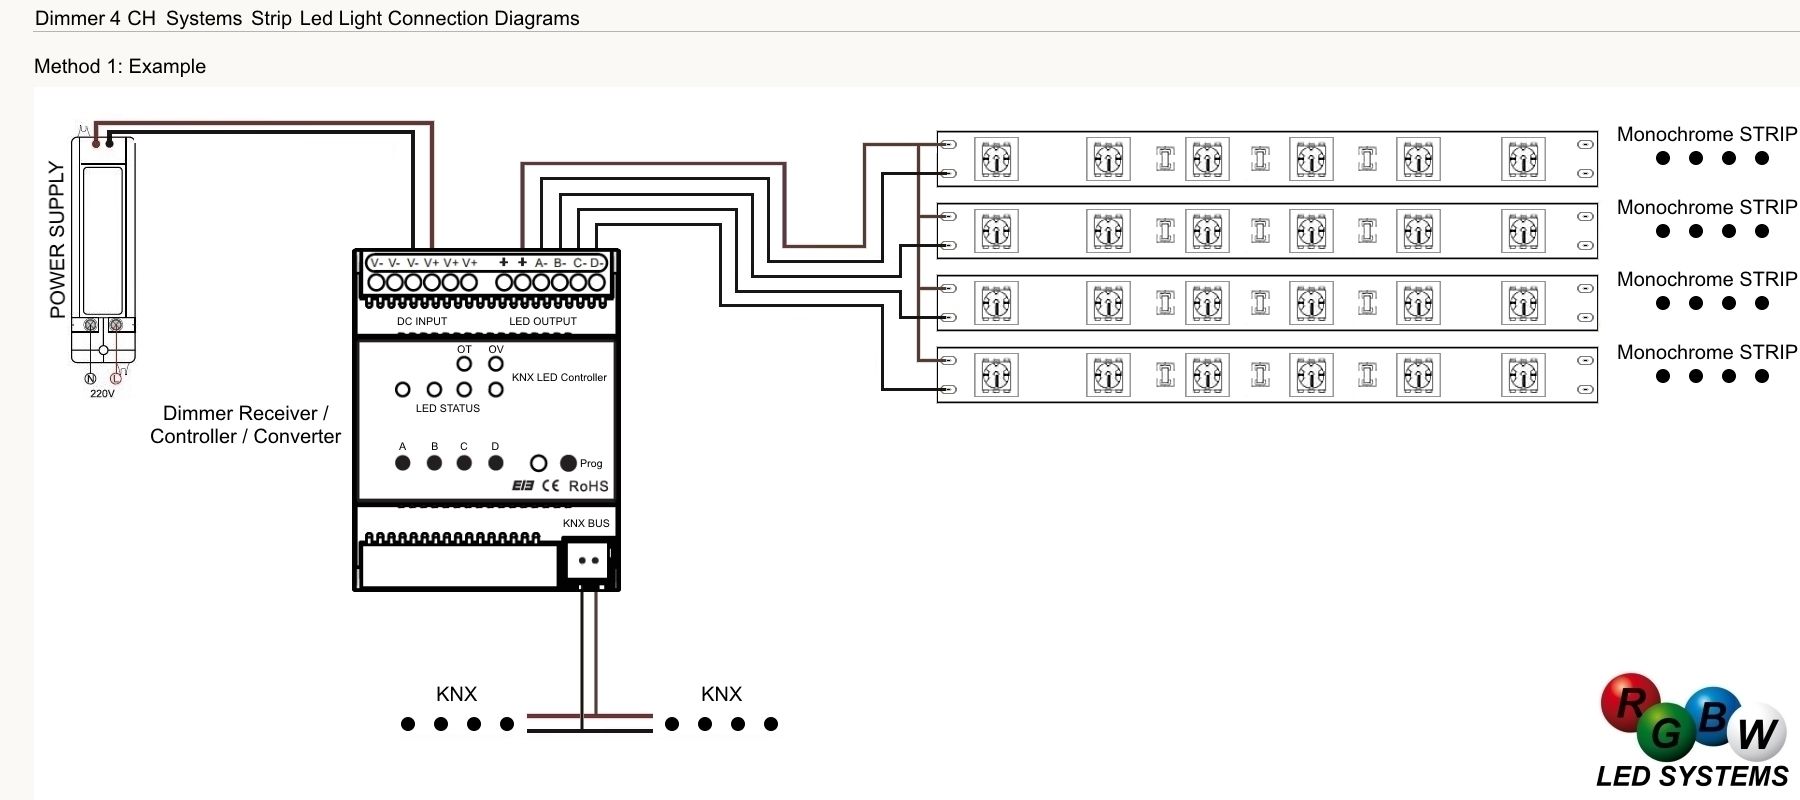  photo controller converter convertitore din strisce led strip tira dimmer pwm knx konnex domotica smart home connection diagram sy_zpsfprueqnk.jpg